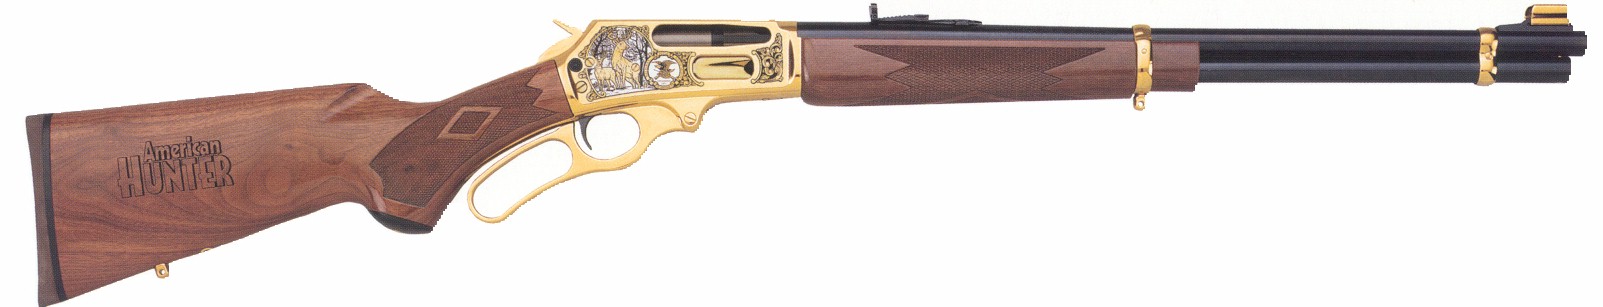 Marlin Firearms Logo A Model 336cs Rifle